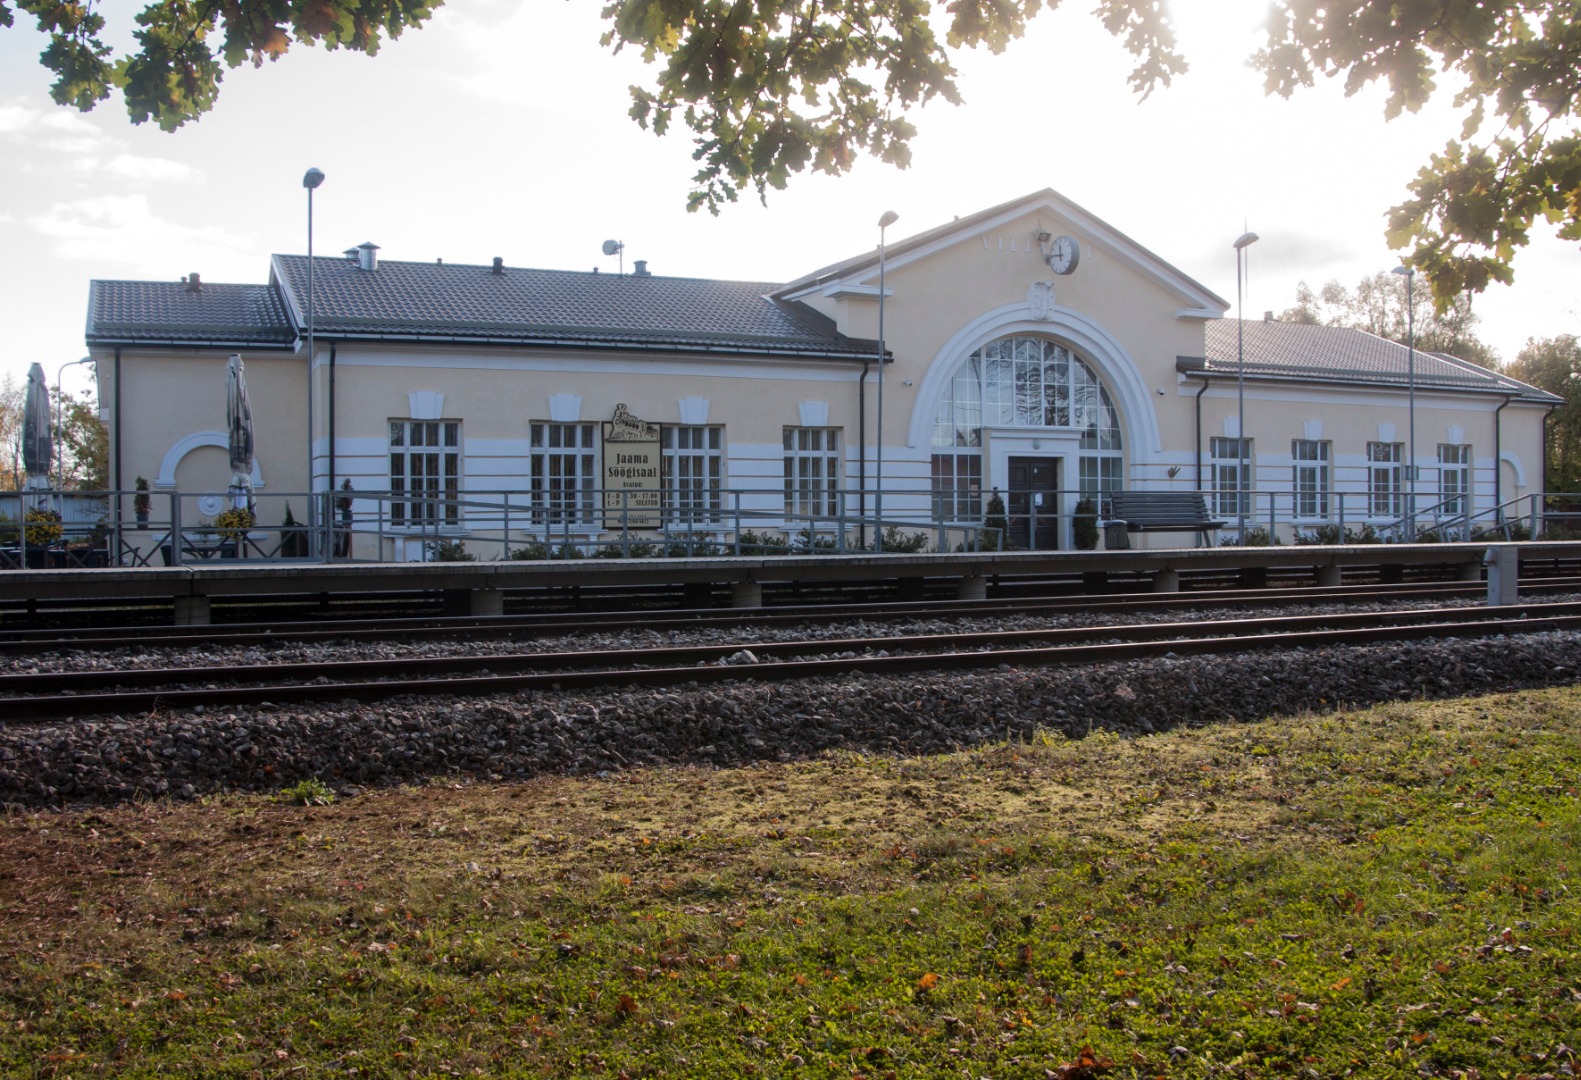 Viljandi railway station Viljandi county Viljandi city Kantreküla district rephoto